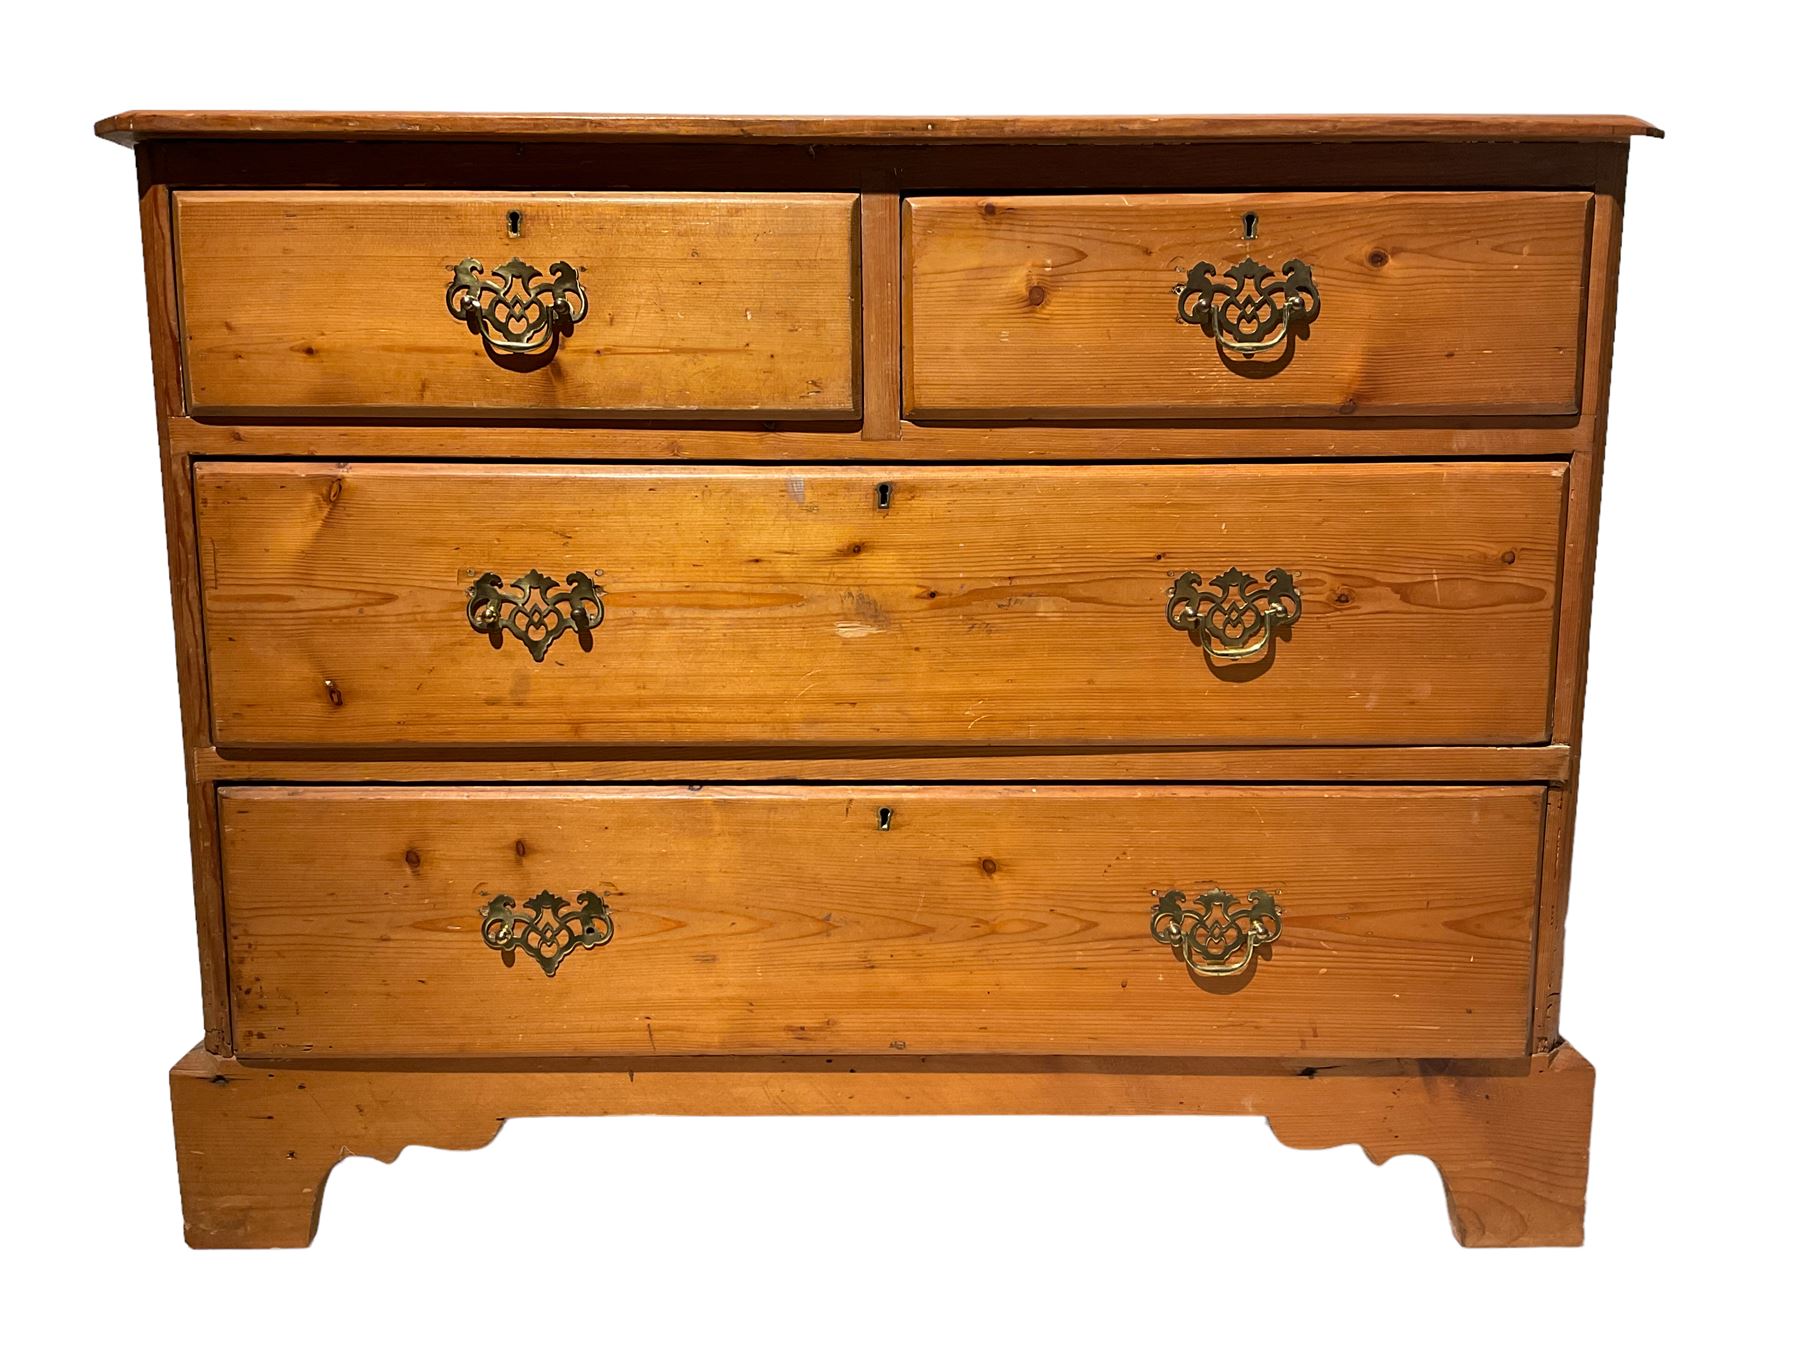 19th century pine chest